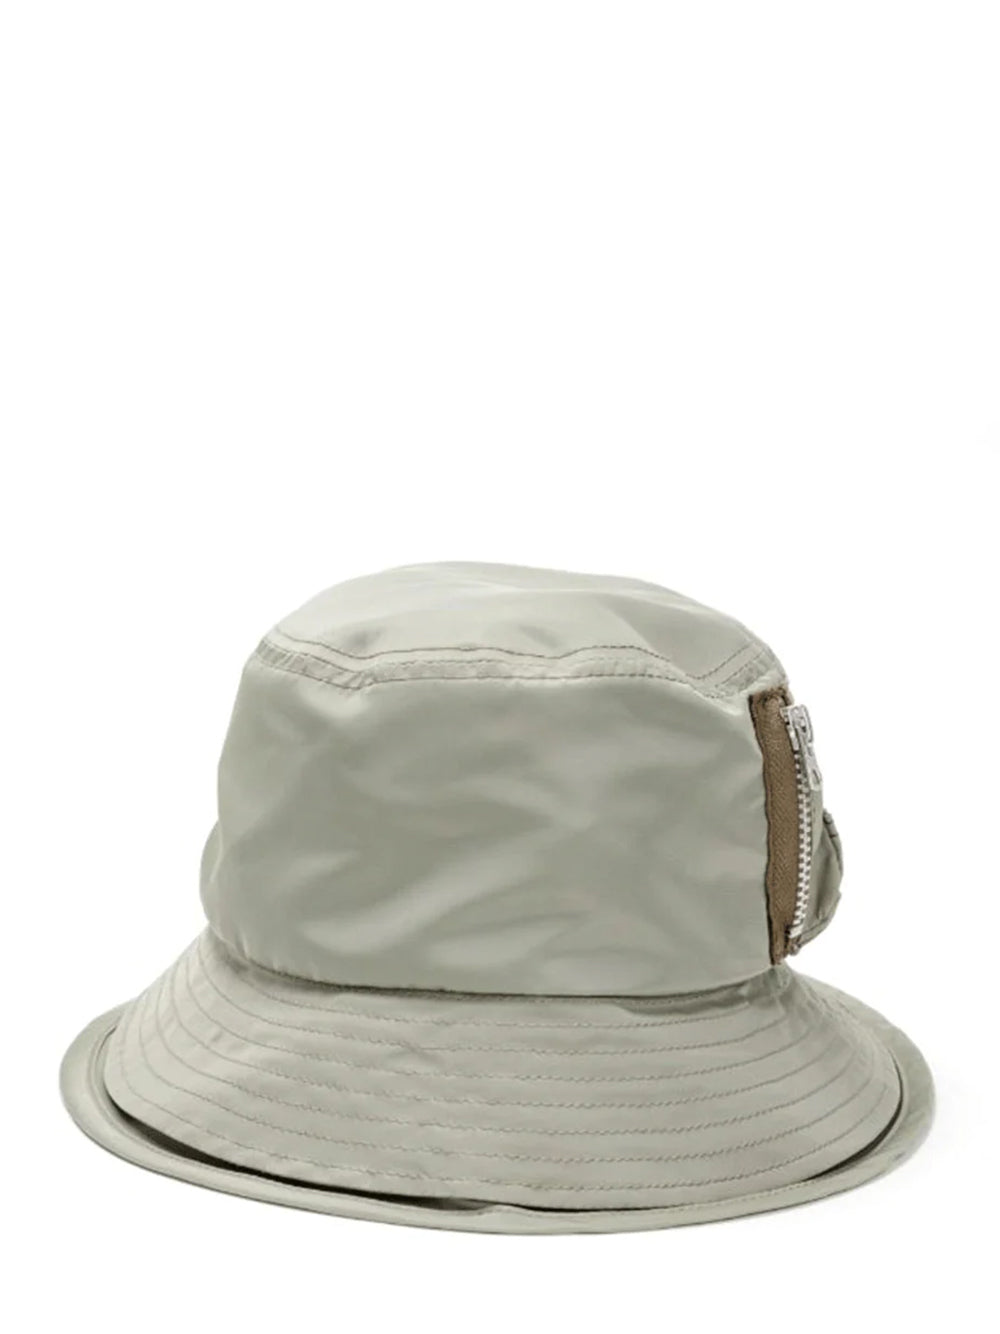 Pocket Double Brim Hat / Nylon Twill L/Khaki